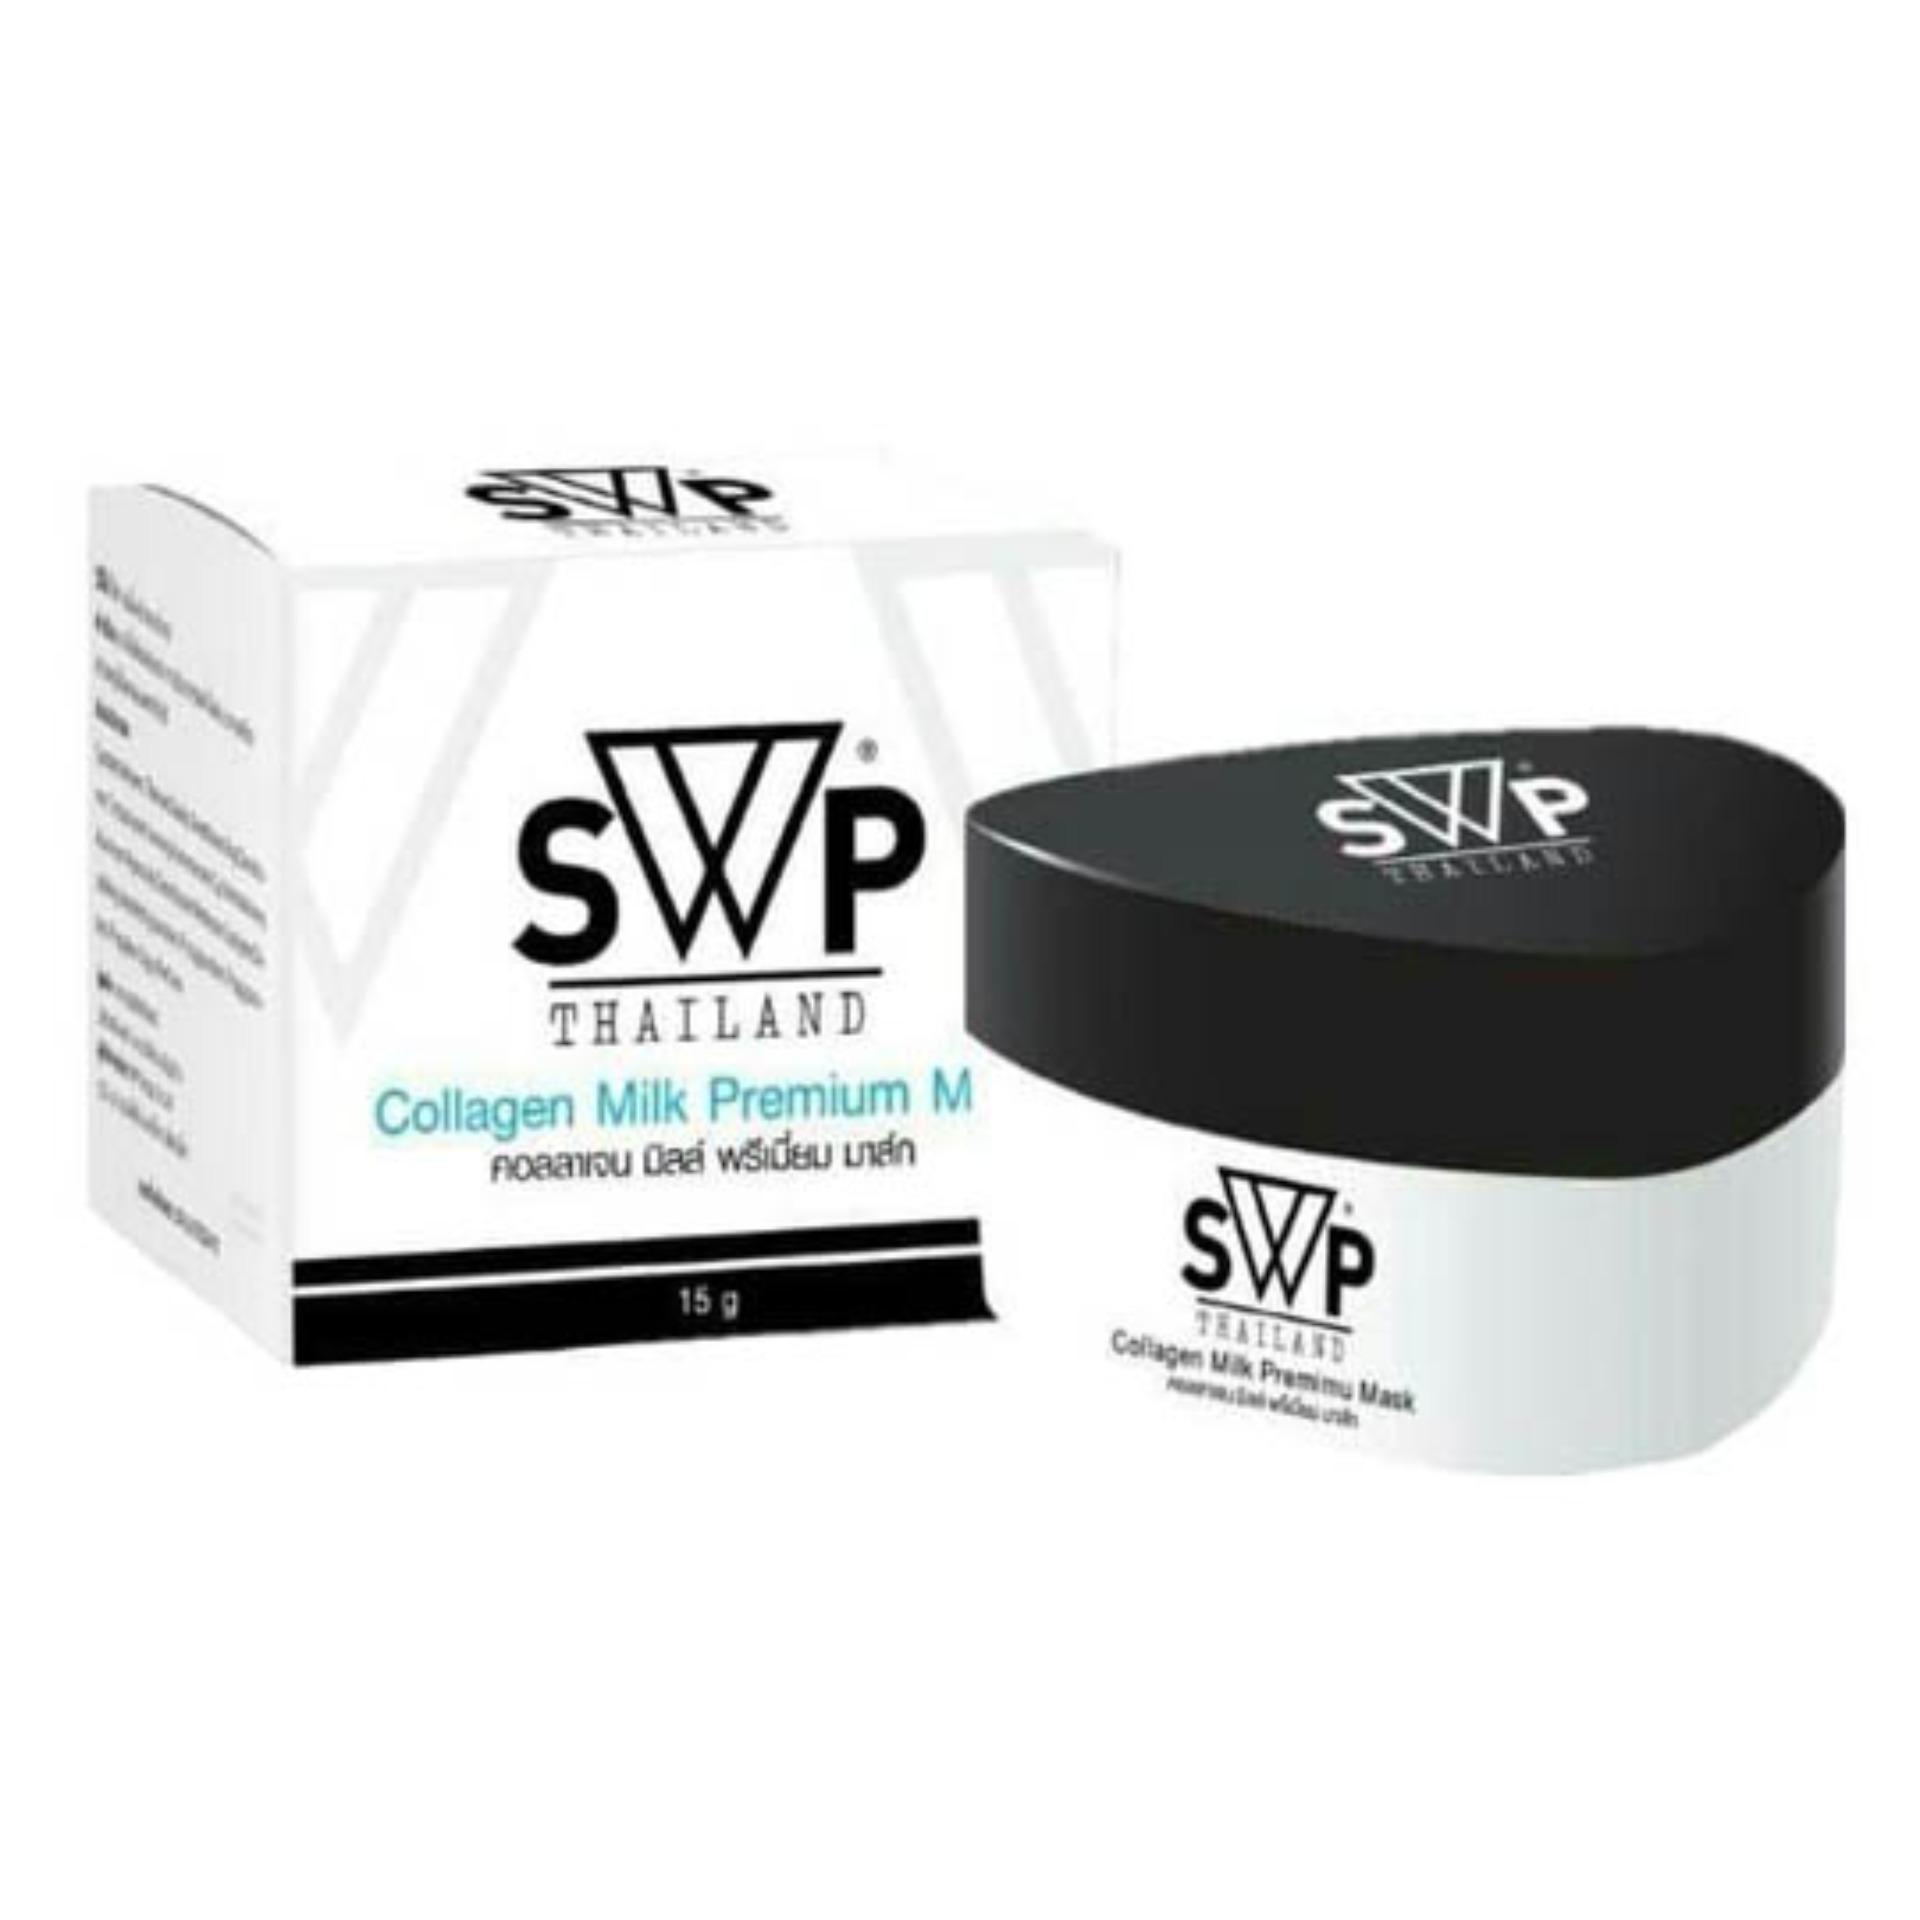 SWP Beauty House Collagen Milk Premium sleeping Mask swp mask มาร์คswp มาร์คหน้าน้ำนม บำรุงผิวช่วงเวลานอนหลับ 15g (1 ชิ้น)